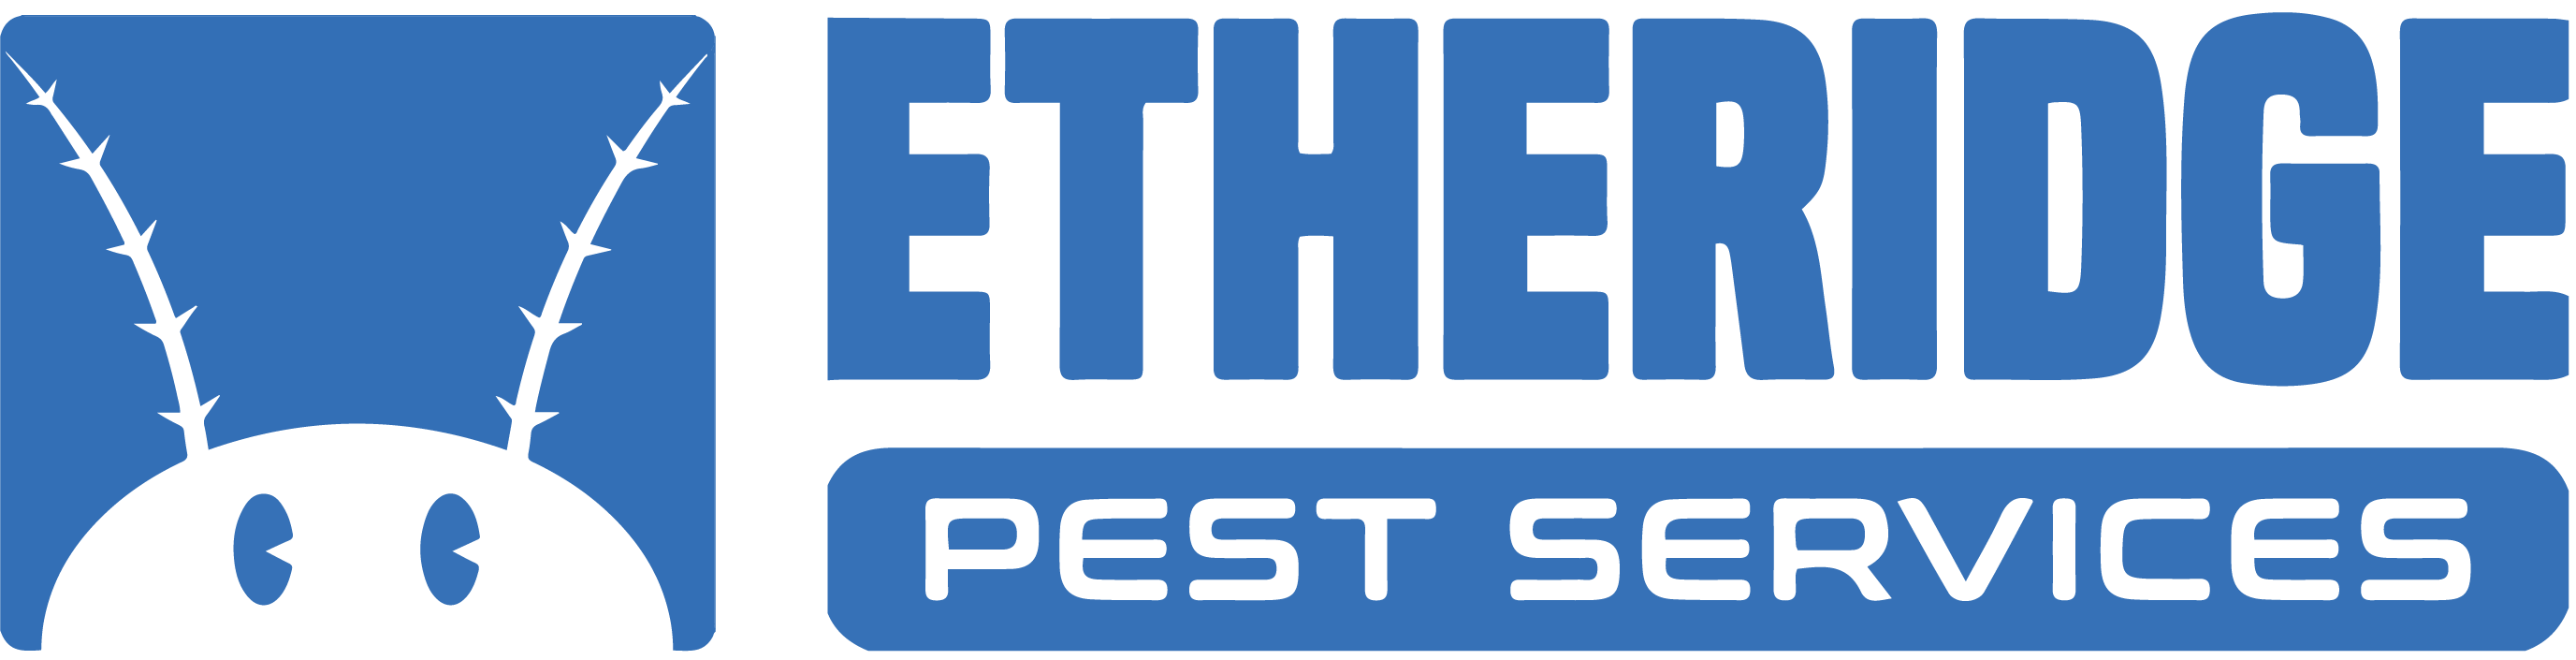 Etheridge Pest Services